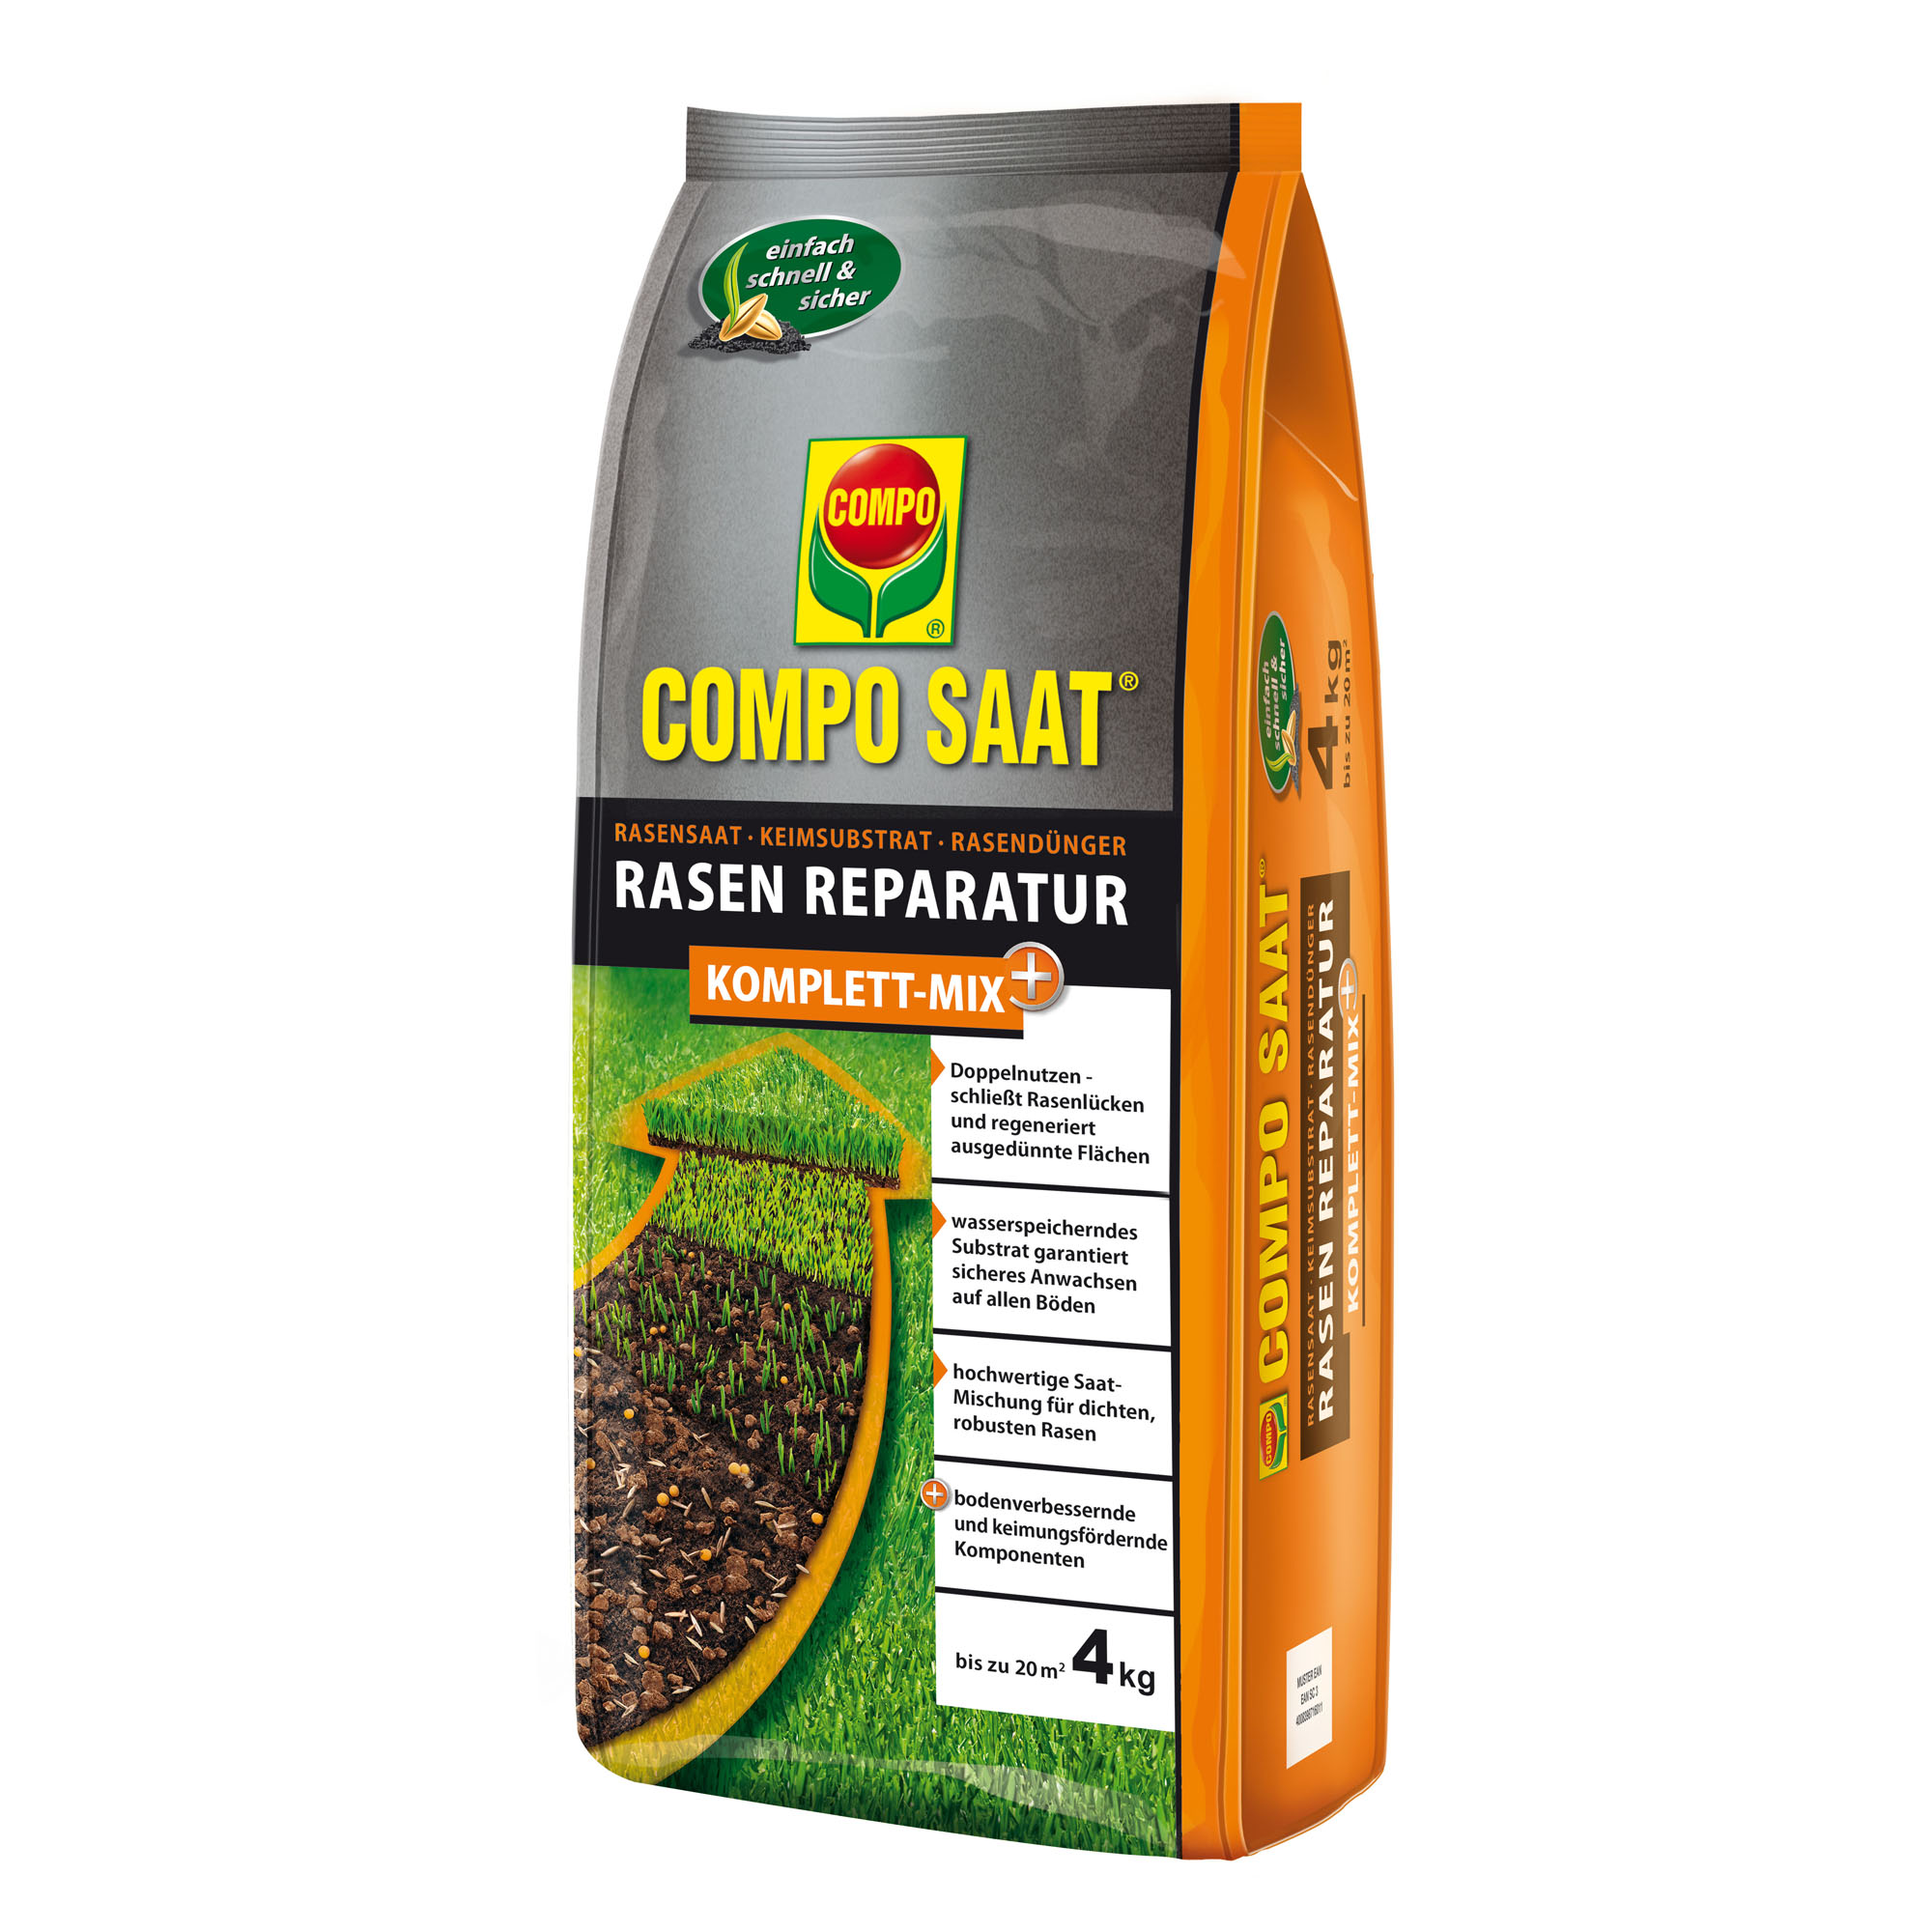 Rasenreparatur 'Compo Saat' Komplett-Mix Plus 4 kg + product picture